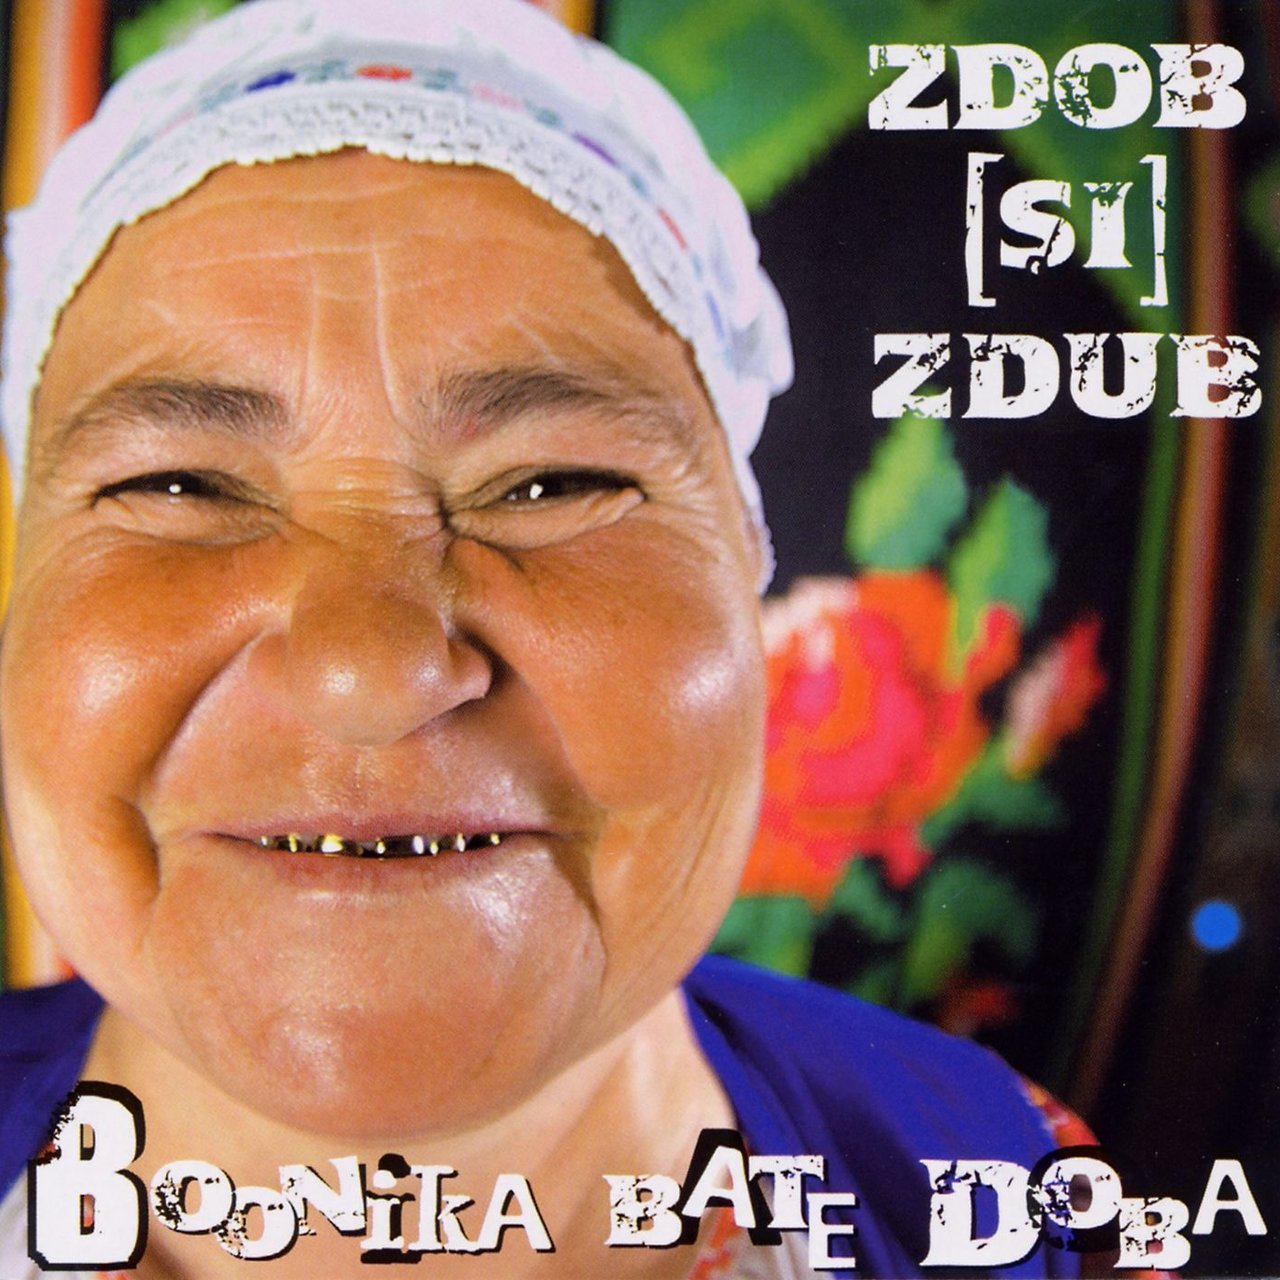 Zdob și Zdub — Boonika Bate Doba cover artwork